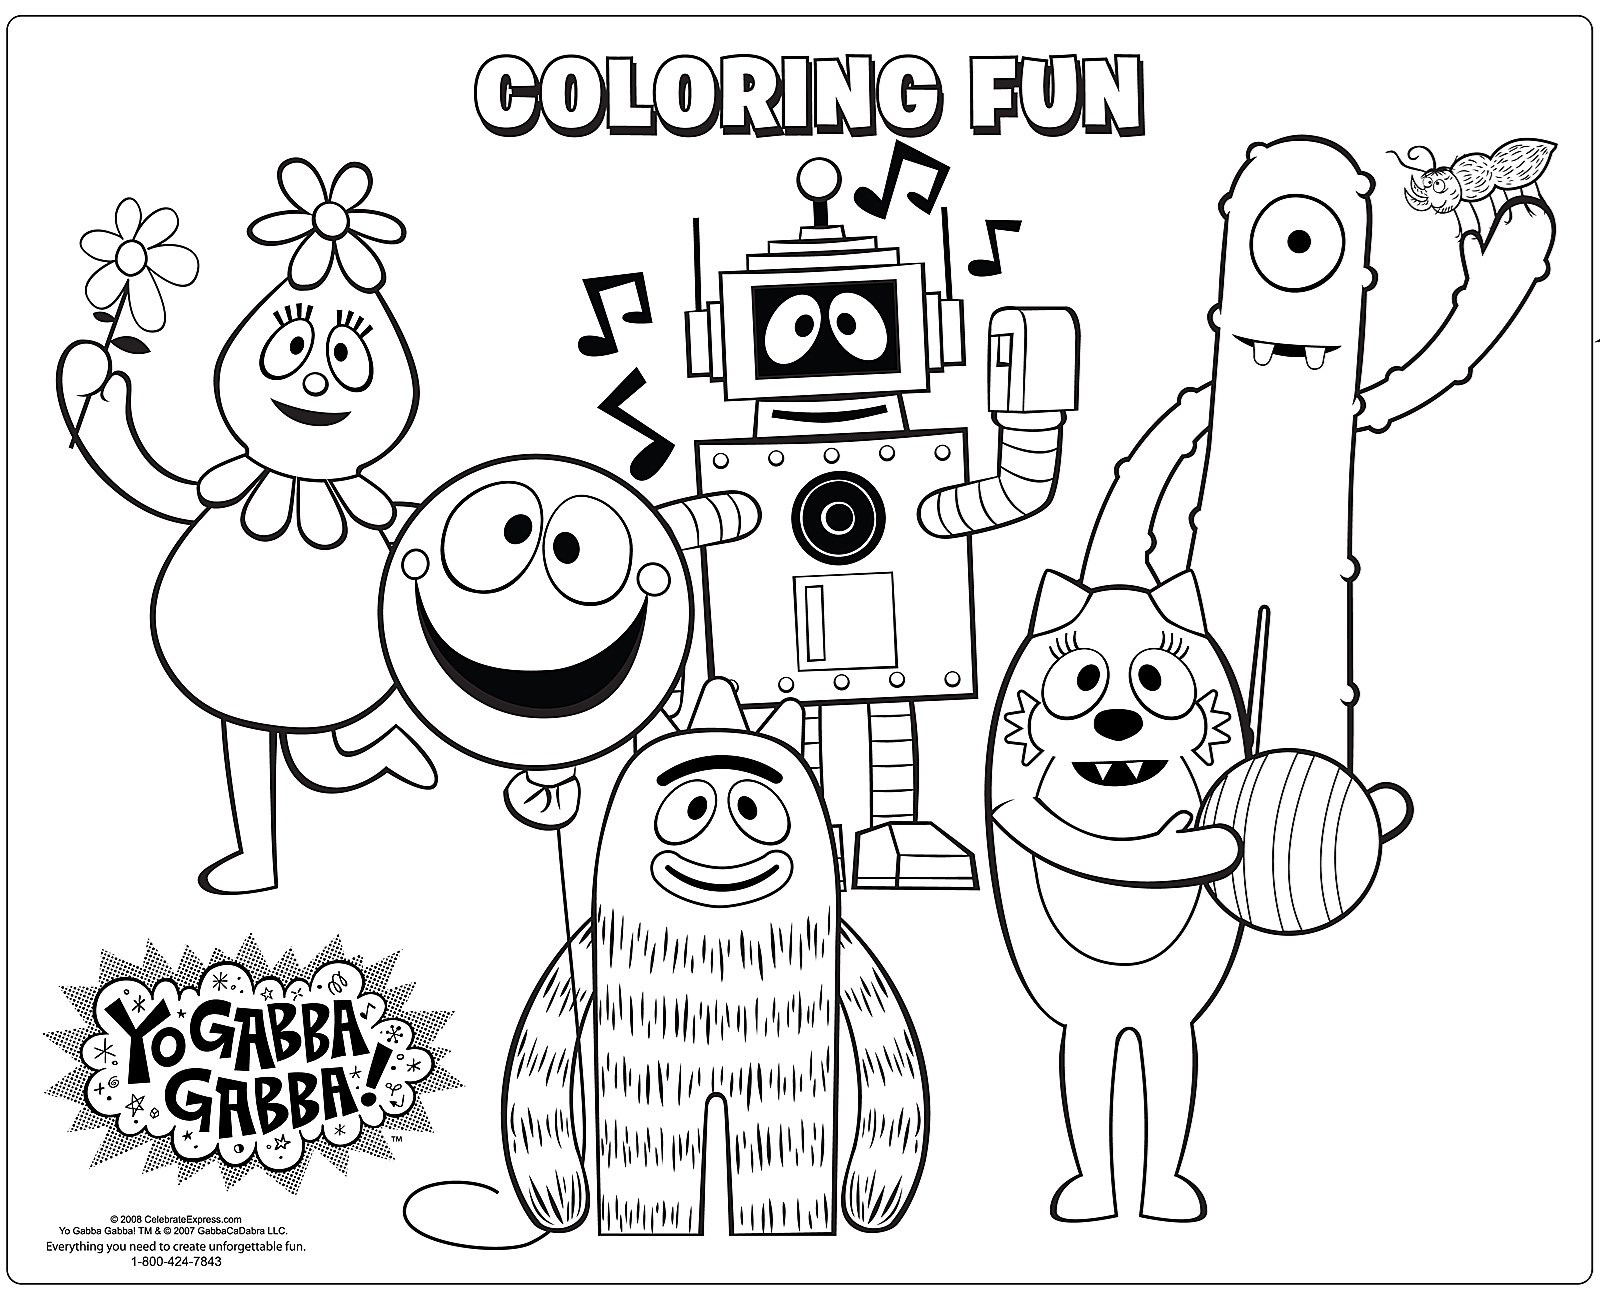 Yo Gabba Gabba Coloring Pages Free Printable at GetColorings.com | Free ...